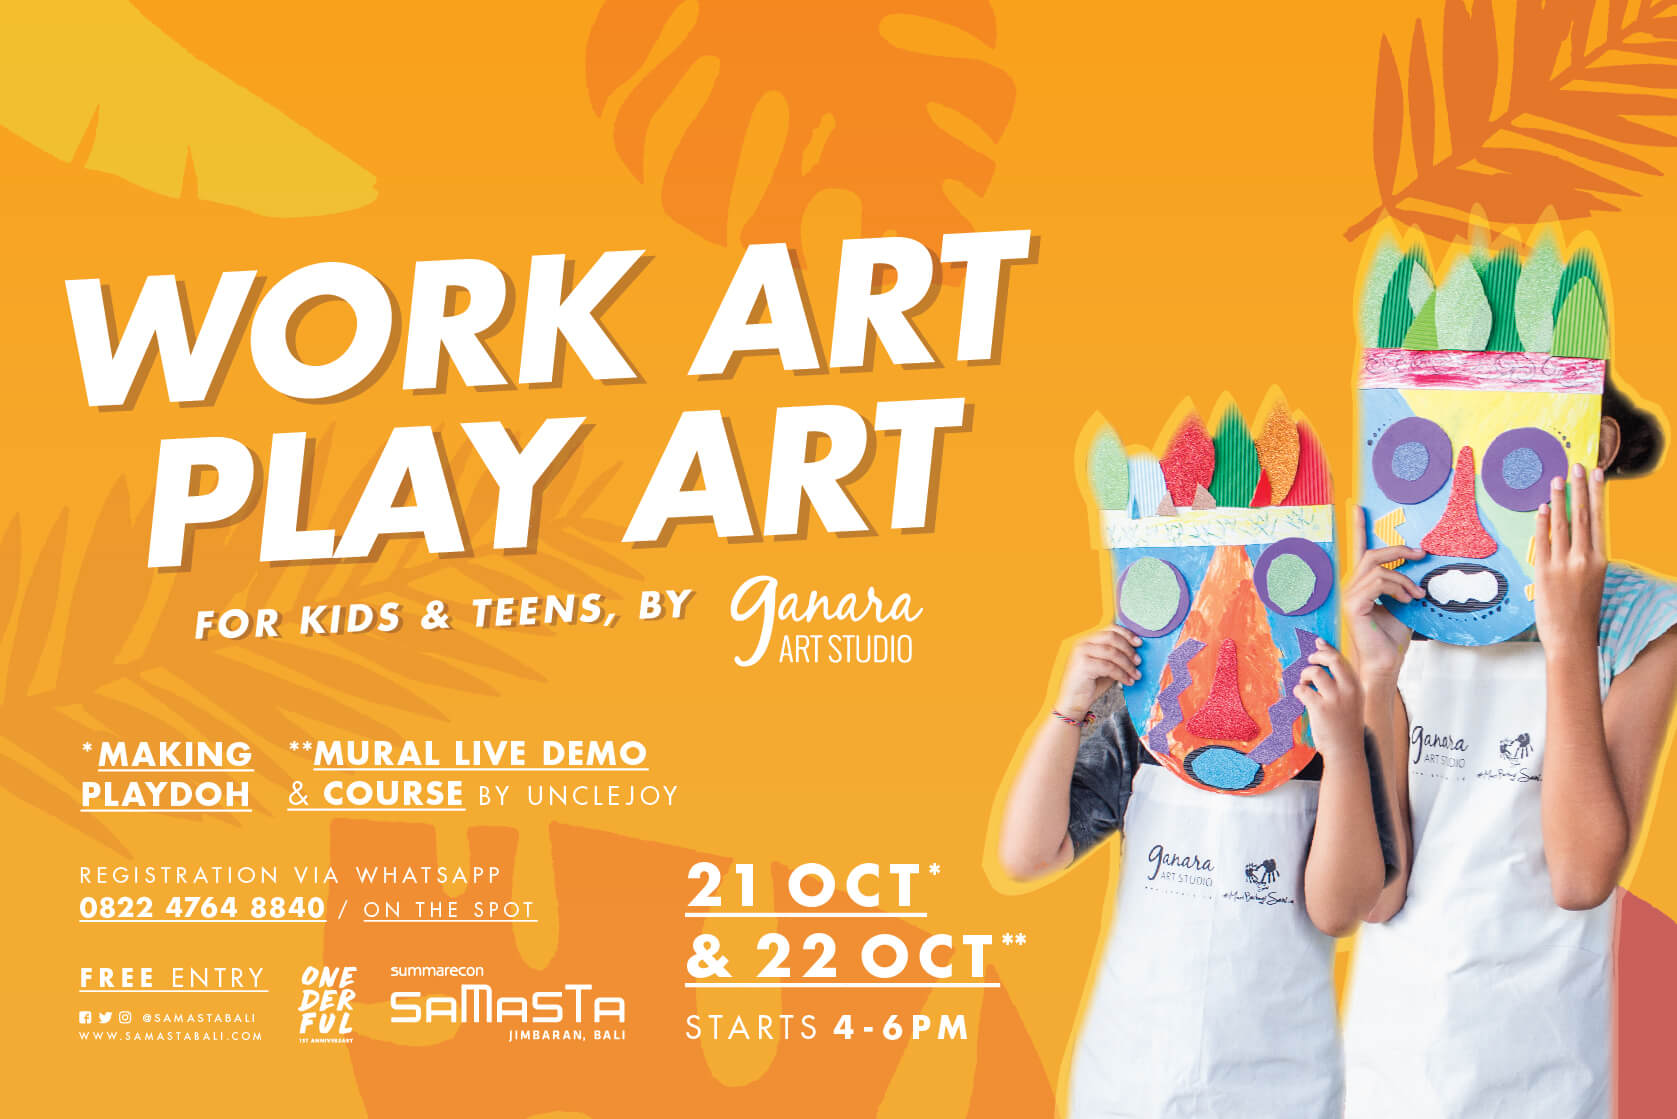 Work Art Play Art for Kids & Teens by Ganara